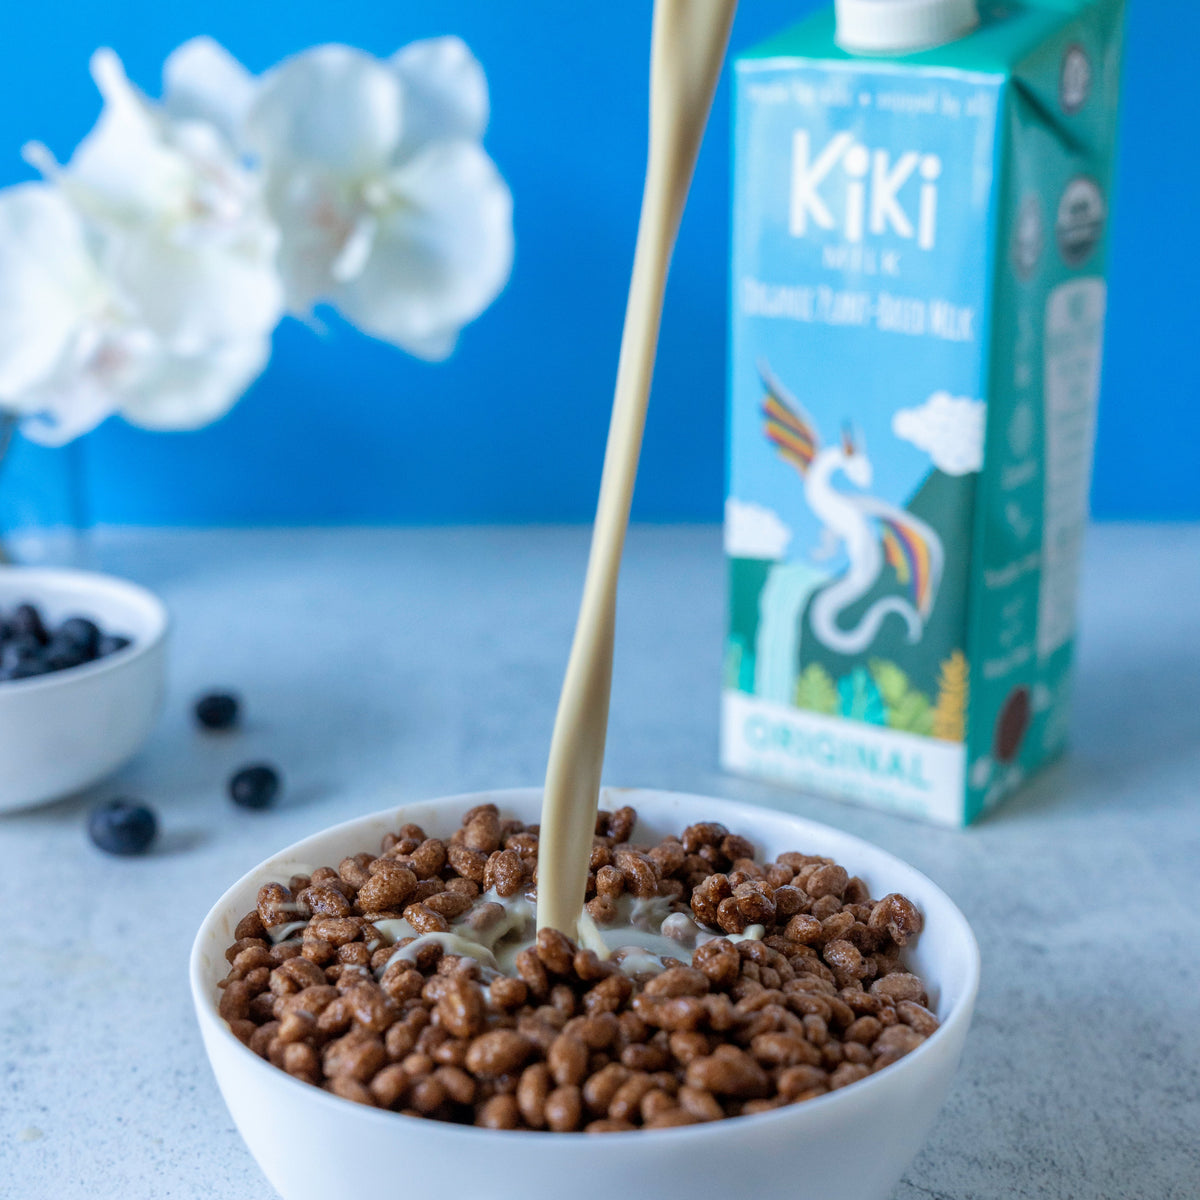 Original Kiki Milk • 32 fl oz • Pack of 6 by Kiki Milk